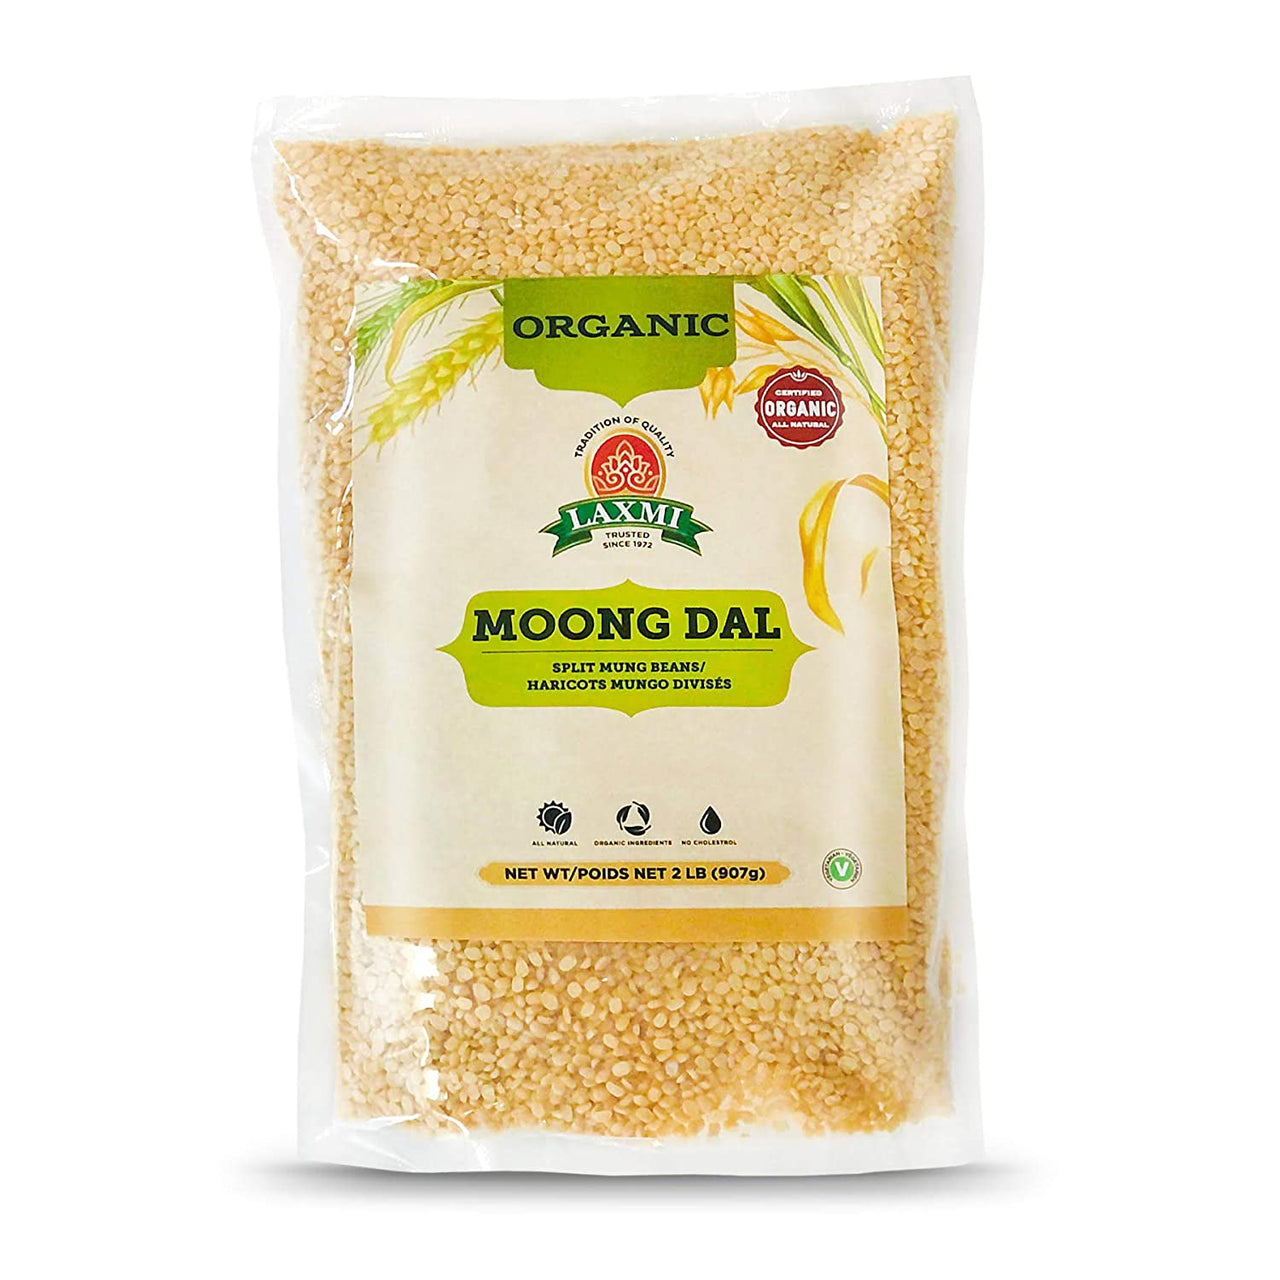 Laxmi Organic Moong Dal, Split Mung Beans, Haricots Mungo Fendus, All Natural (2lbs)